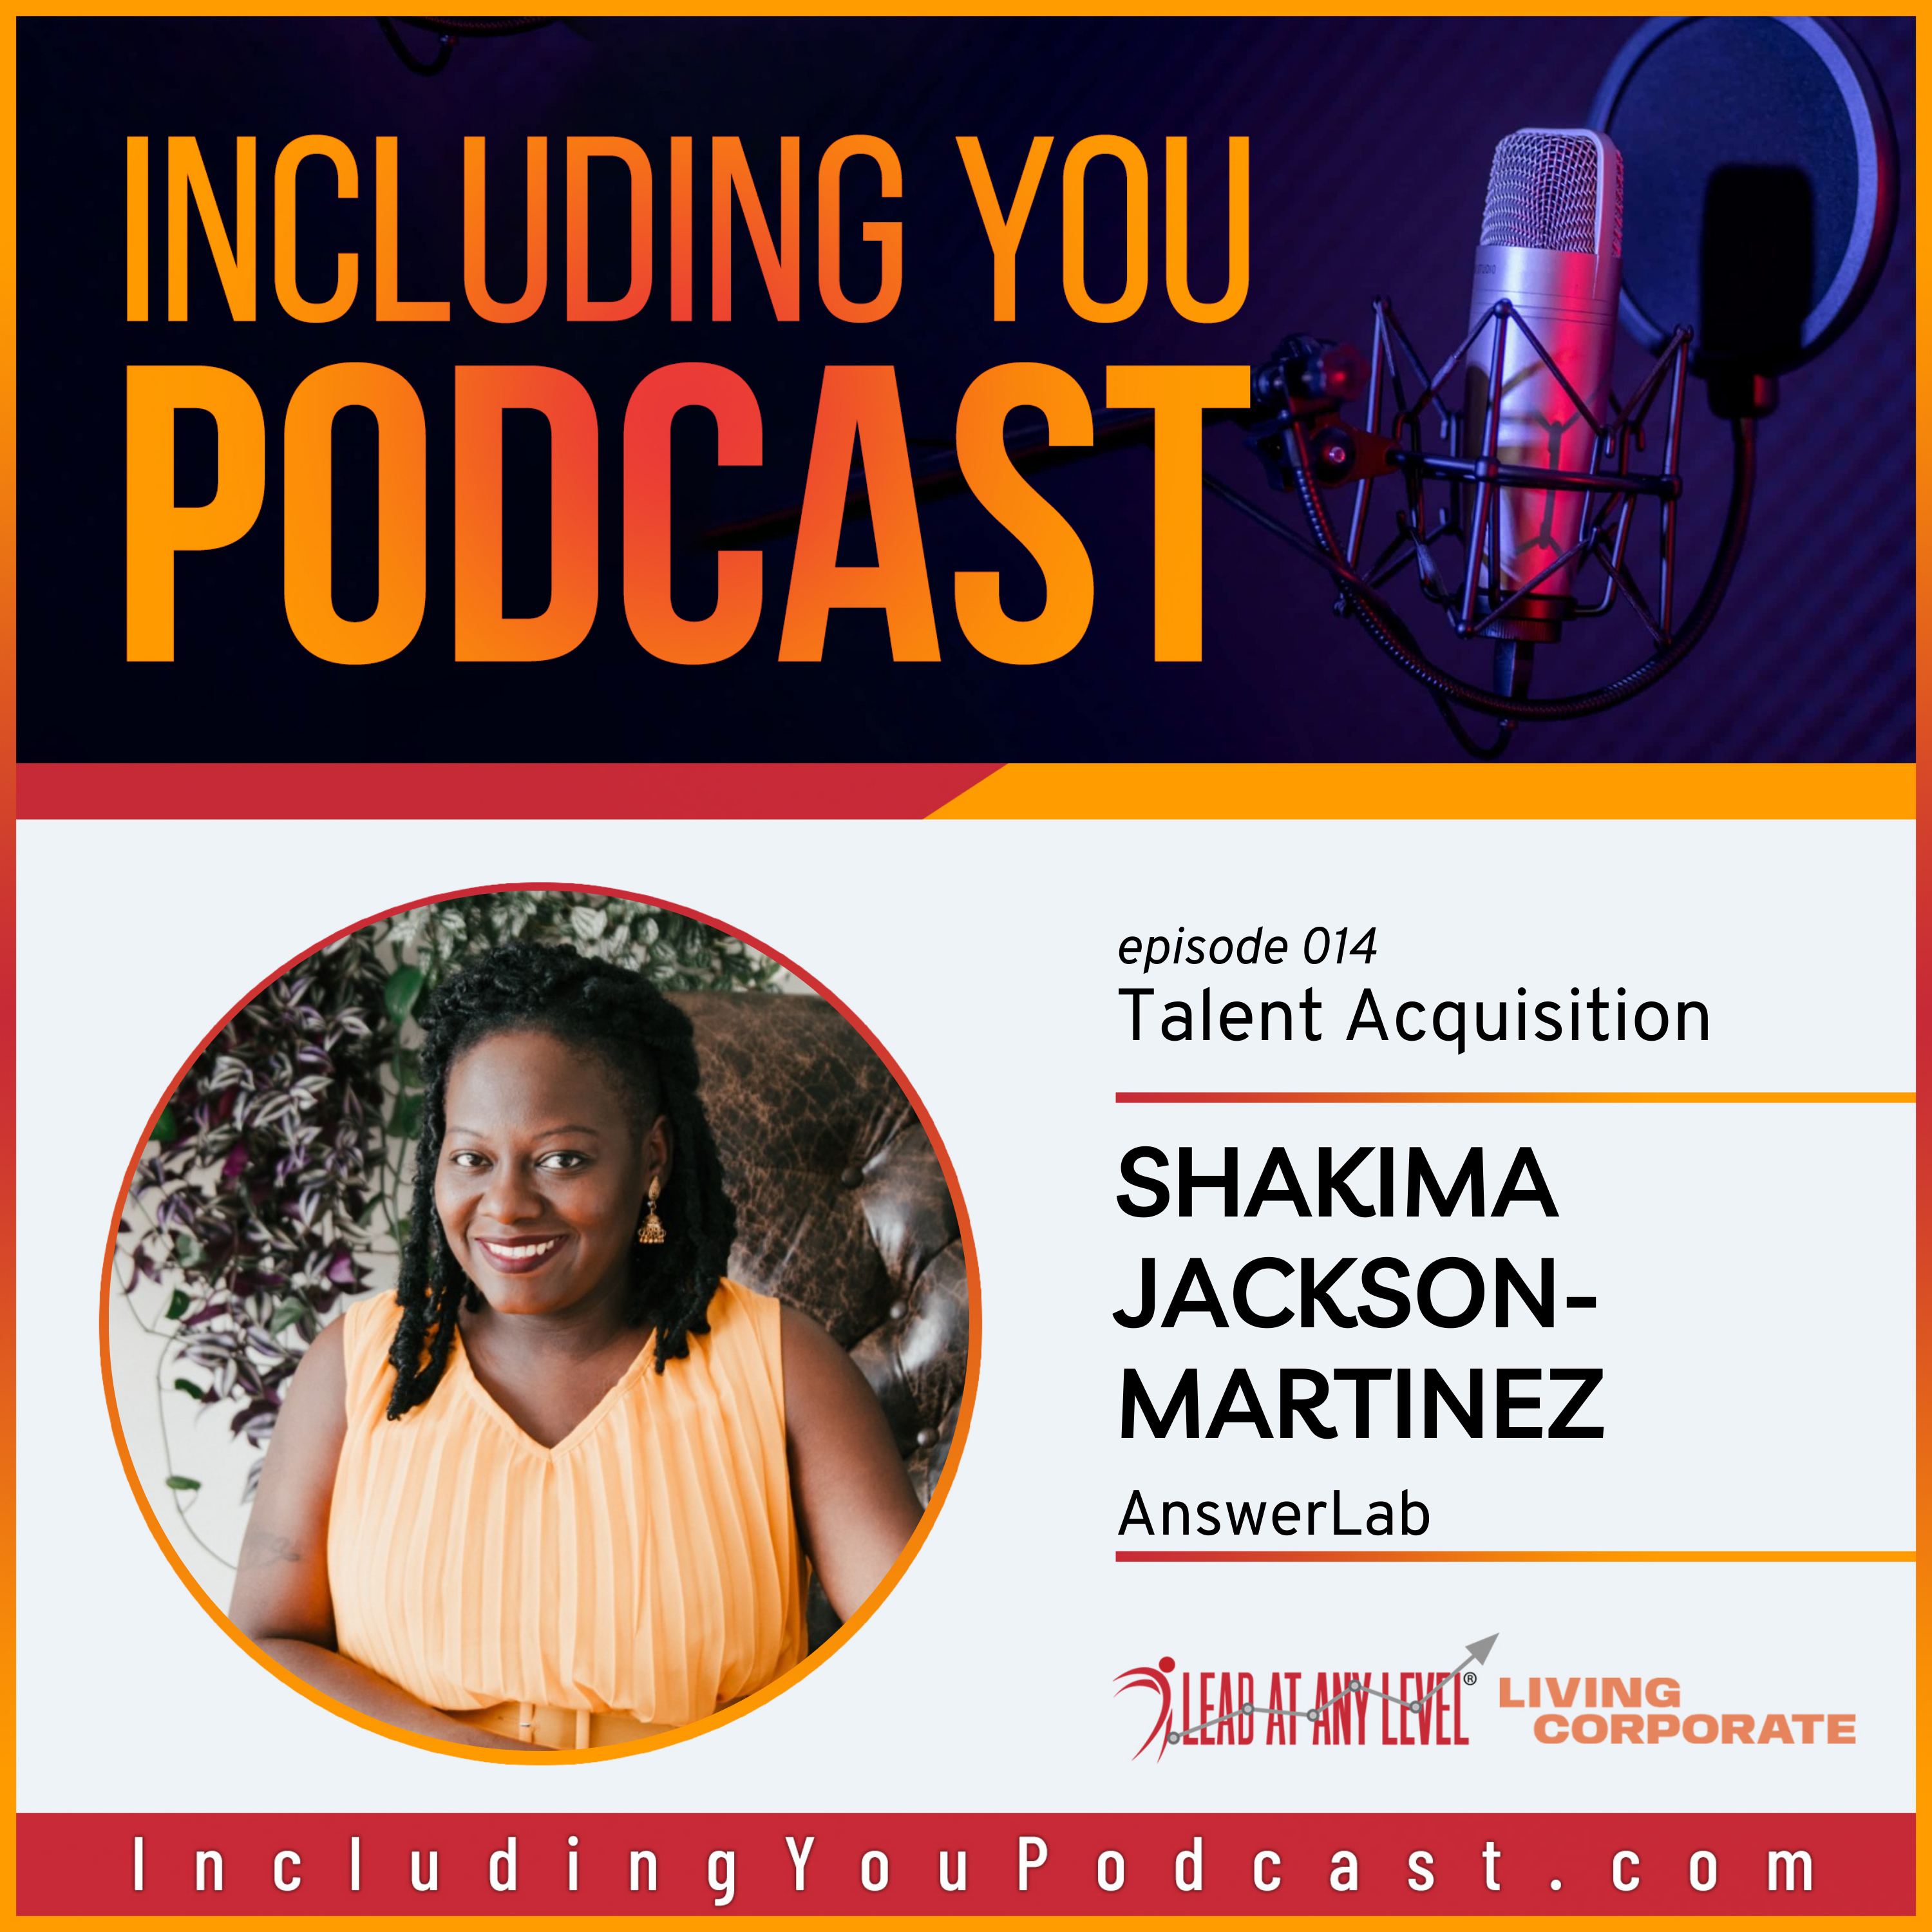 Talent Acquisition with Shakima Jackson-Martinez (Including You Podcast)